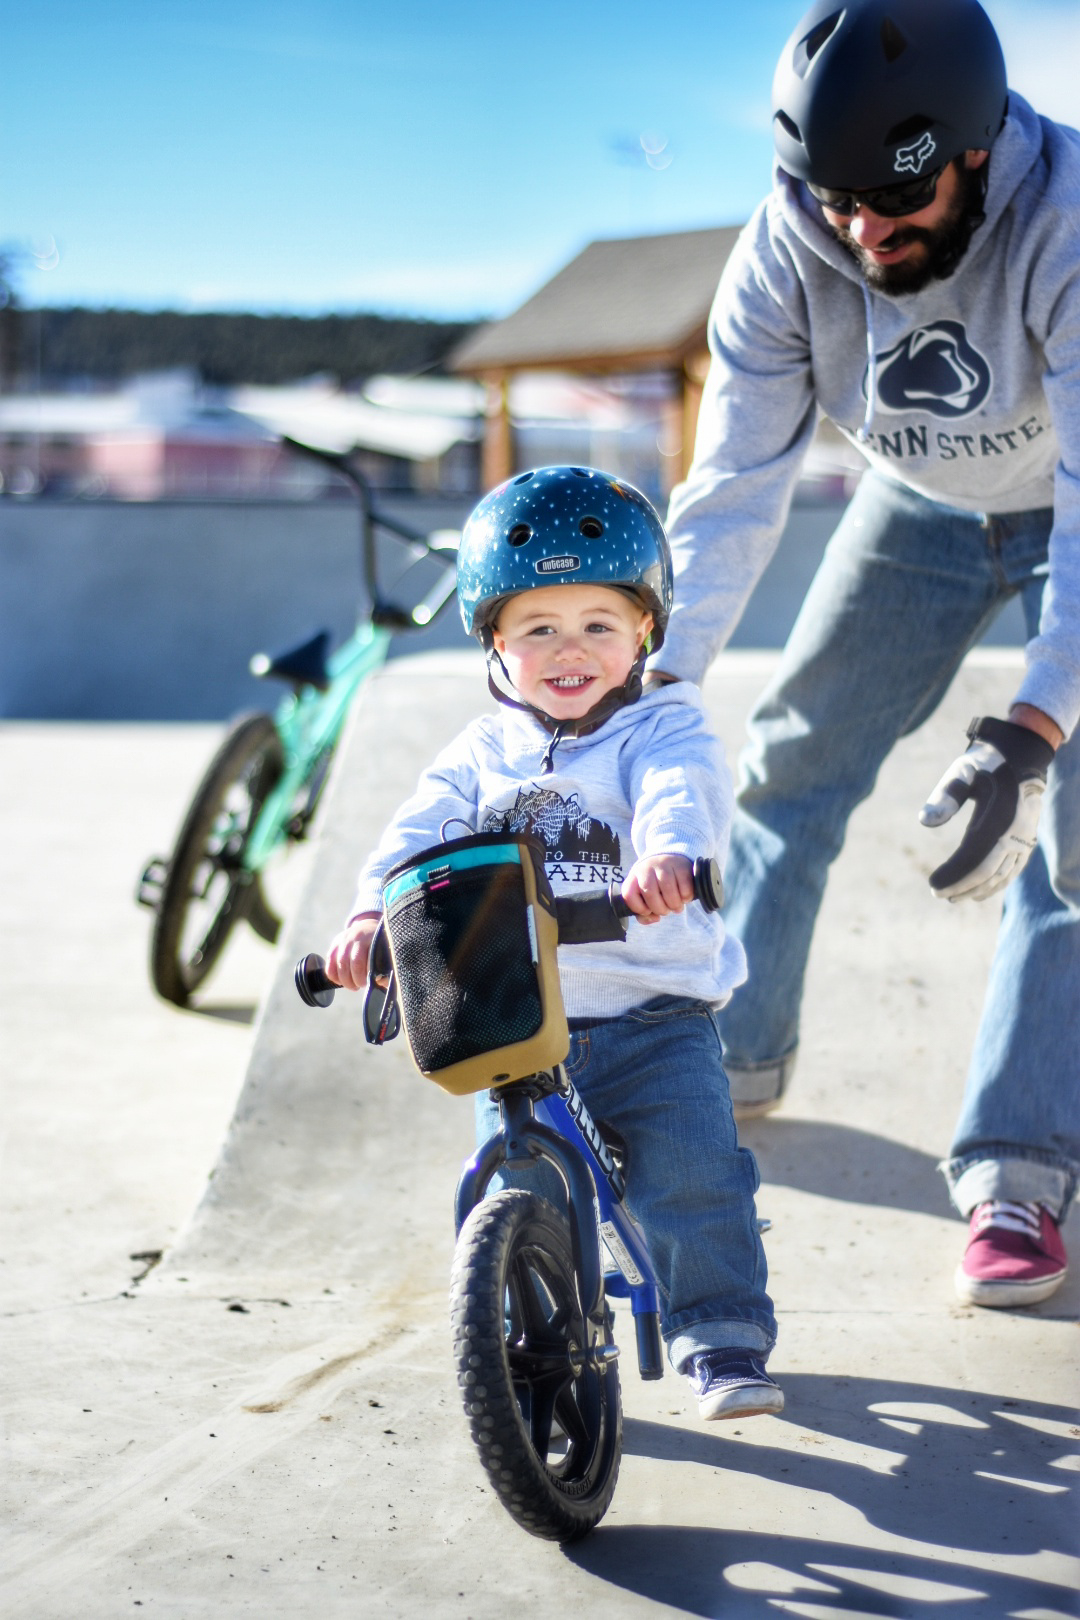 Child rides Blue Strider Balance Bike at skatepark